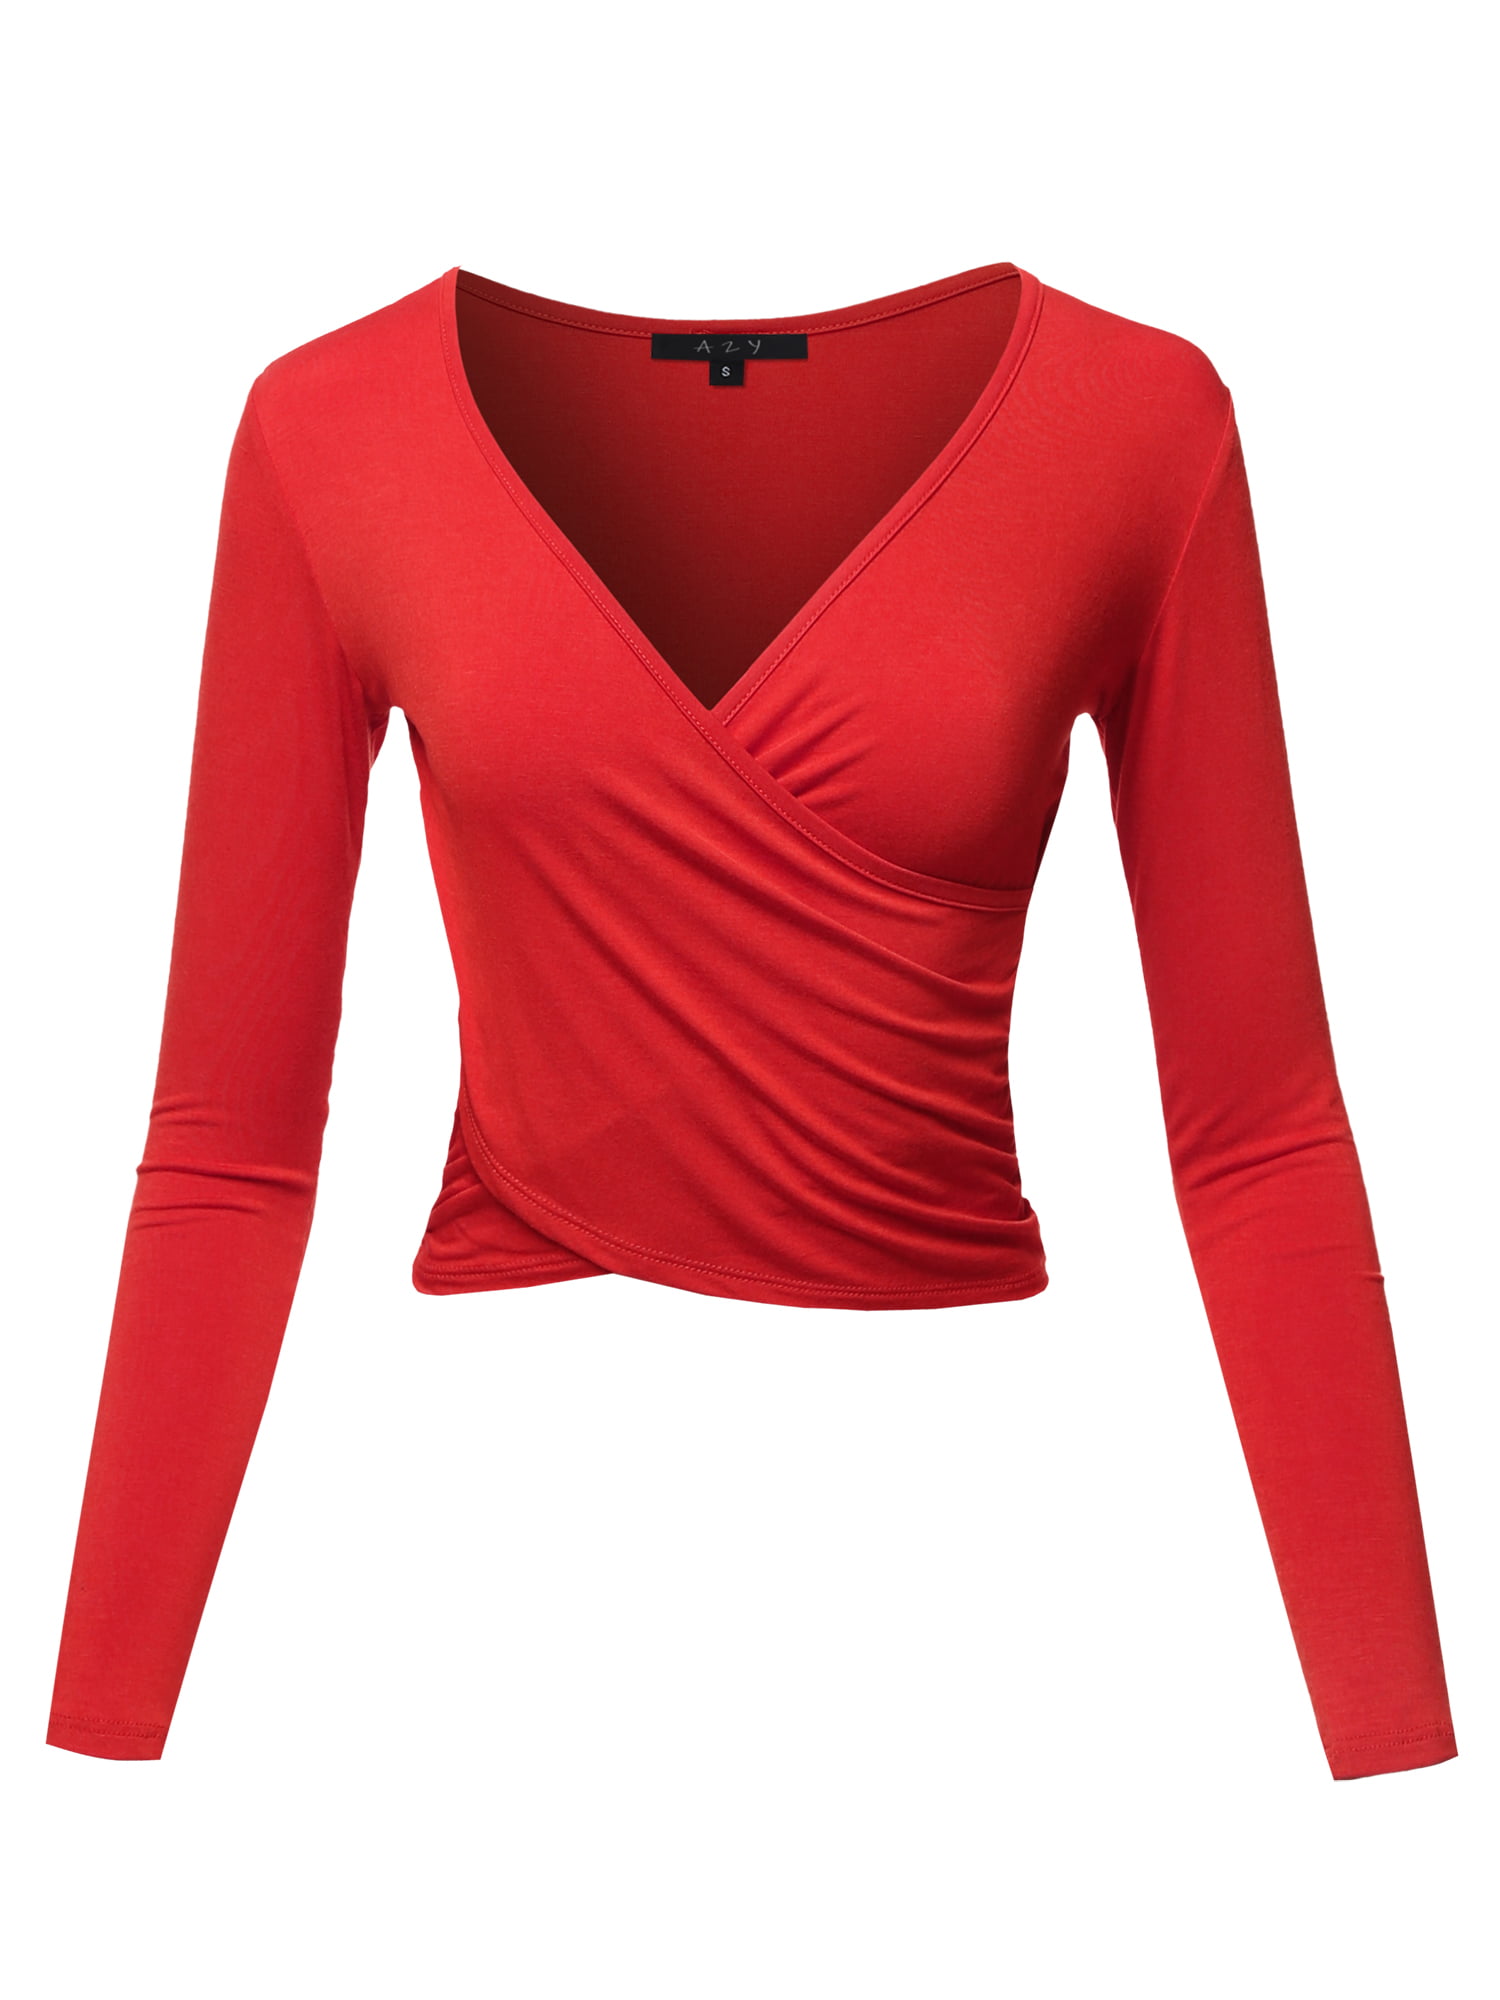 A2Y - A2Y Women's Long Sleeve Deep V Neck Cross Wrap Crop Top T Shirts Red M - Walmart.com